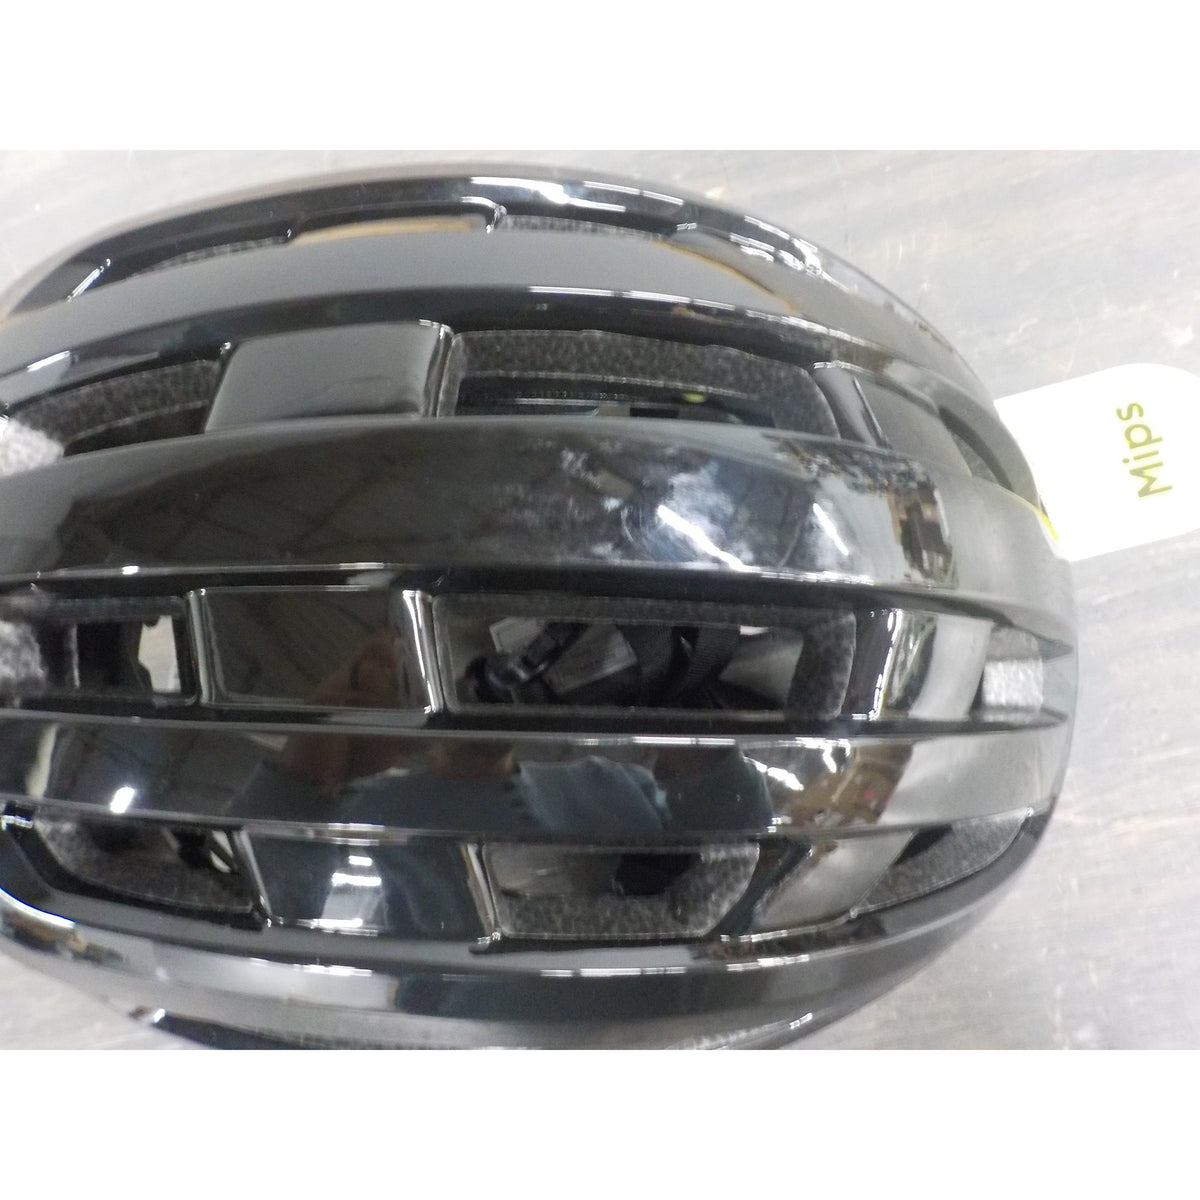 Smith Optics Persist MIPS Bike Helmet - Black/Cement (Discontinued) - Medium - Used - Acceptable